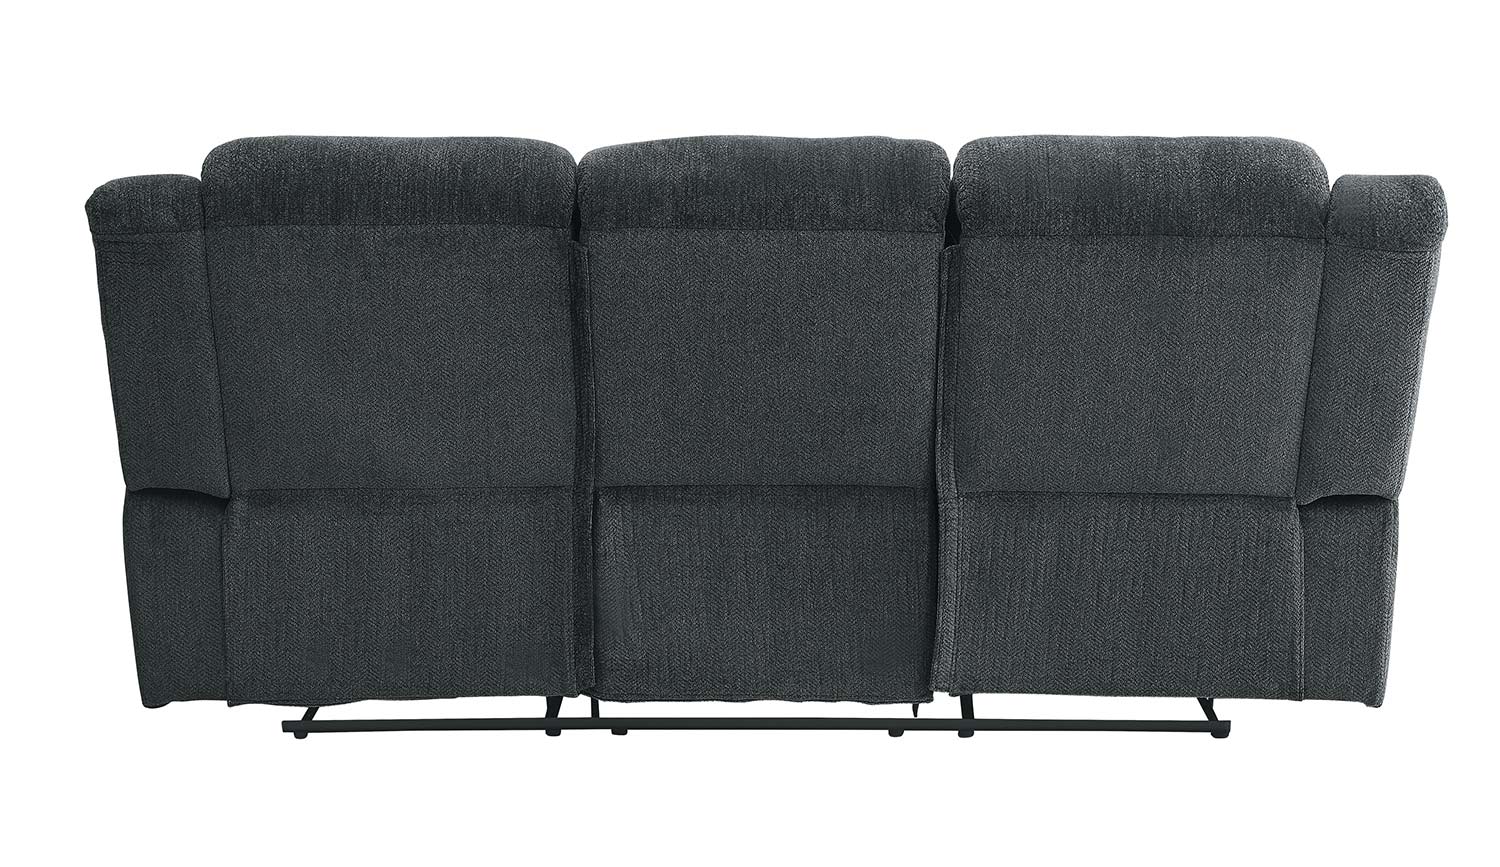 Homelegance Nutmeg Double Reclining Sofa - Charcoal Gray